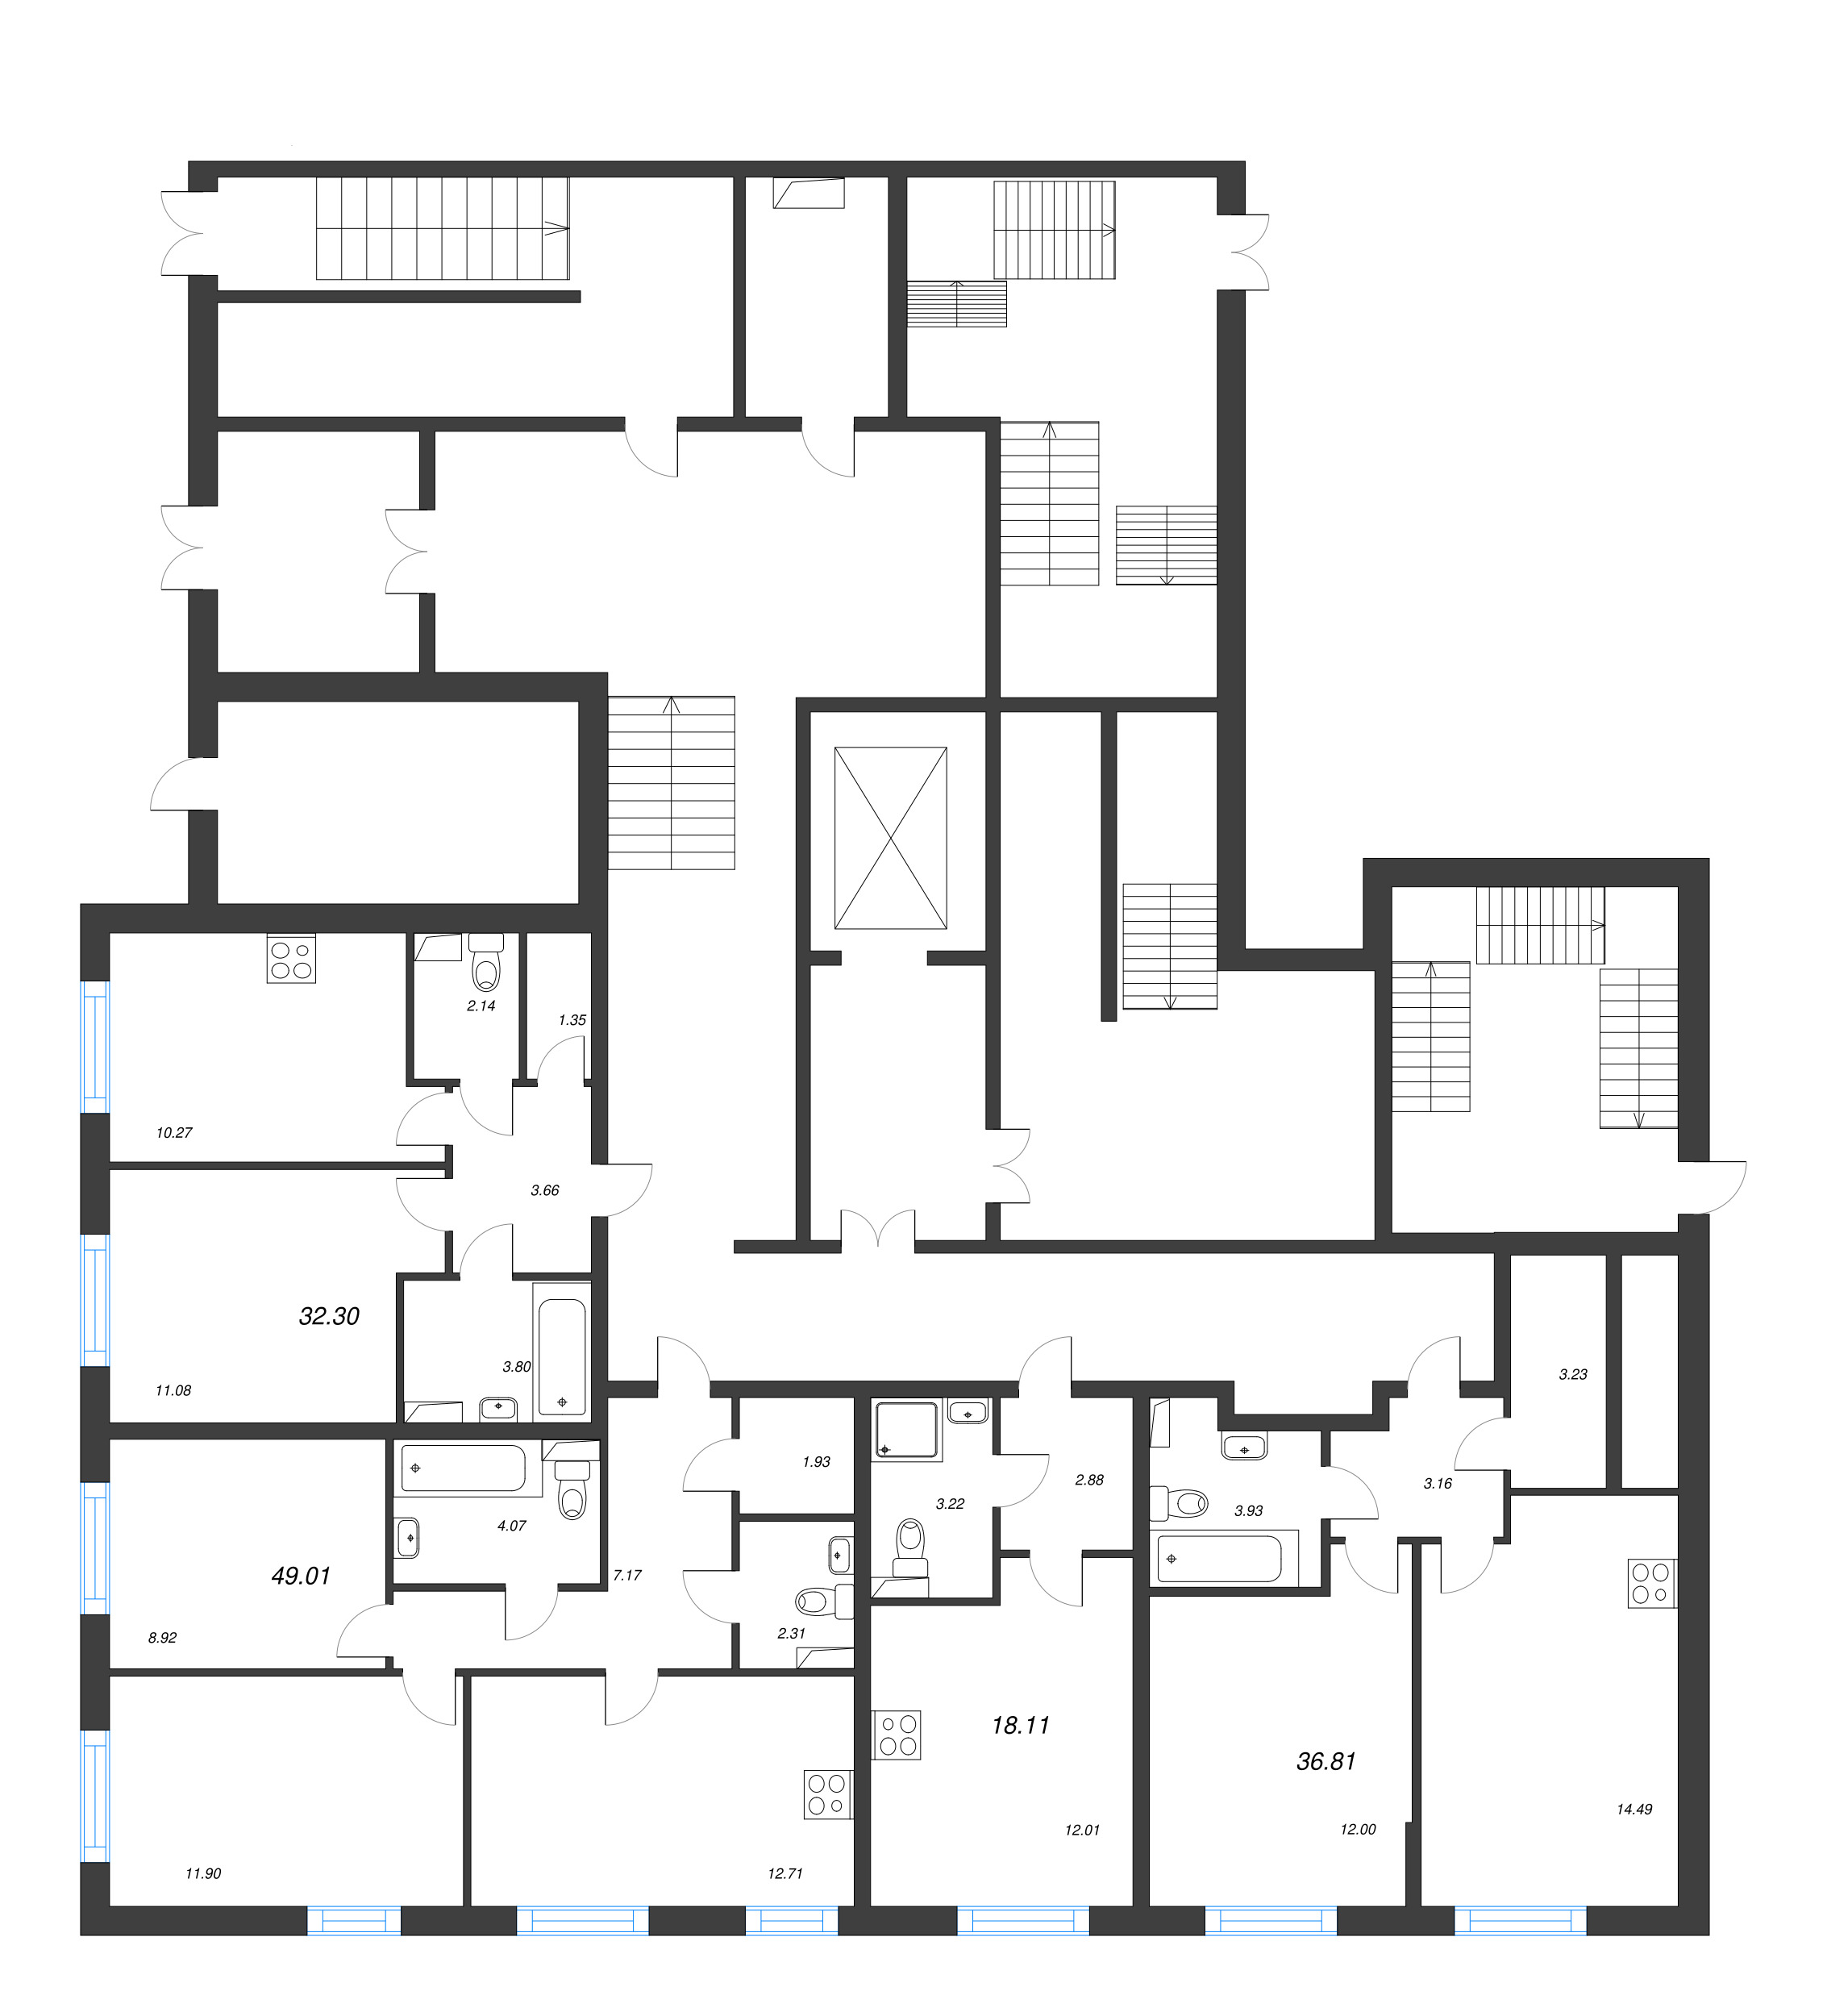 2-комнатная (Евро) квартира, 36.81 м² - планировка этажа